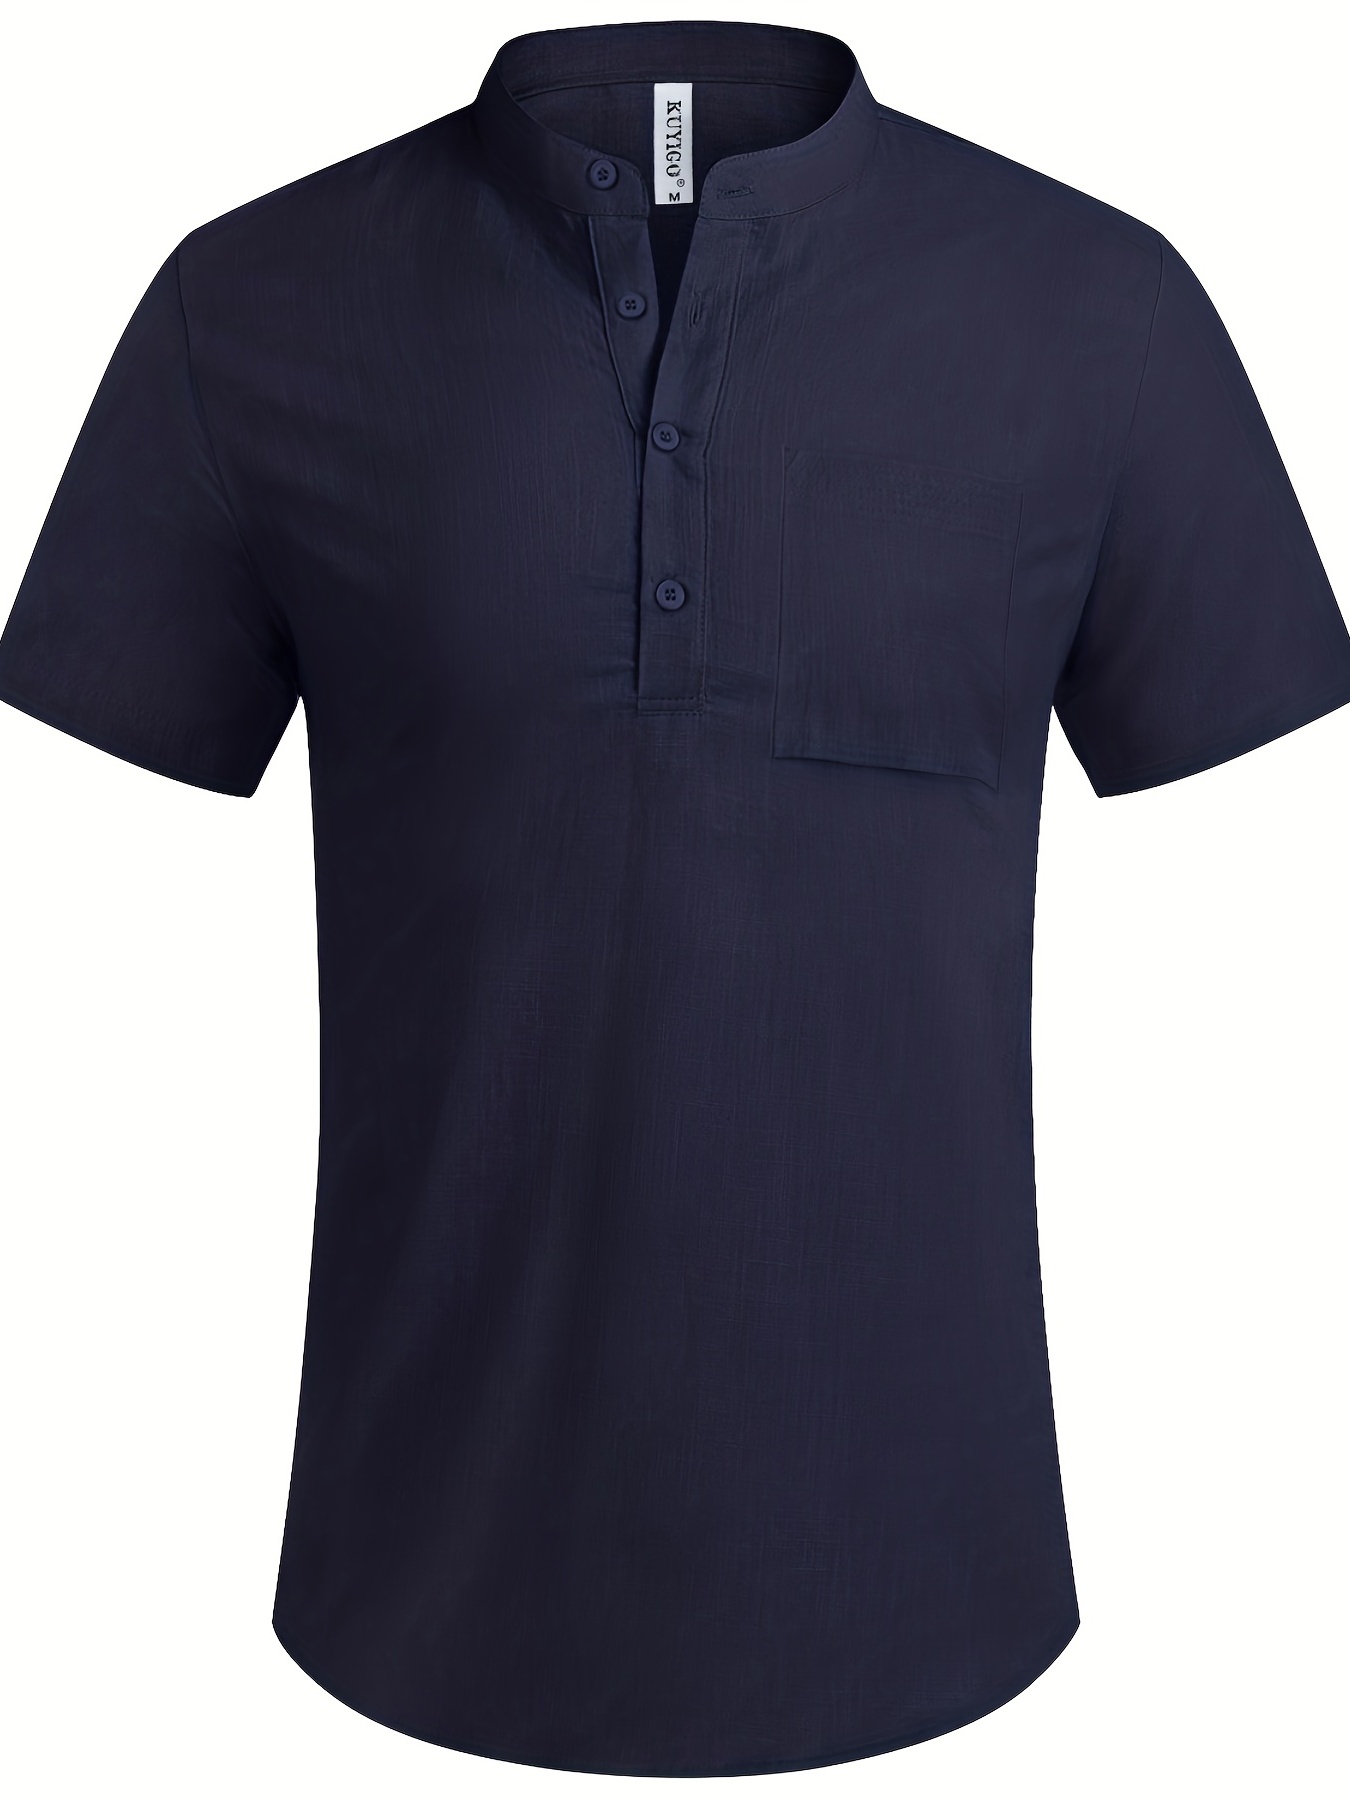 Polo Shirts for Men,Mens Polo Shirts Short Sleeve Men's Classic